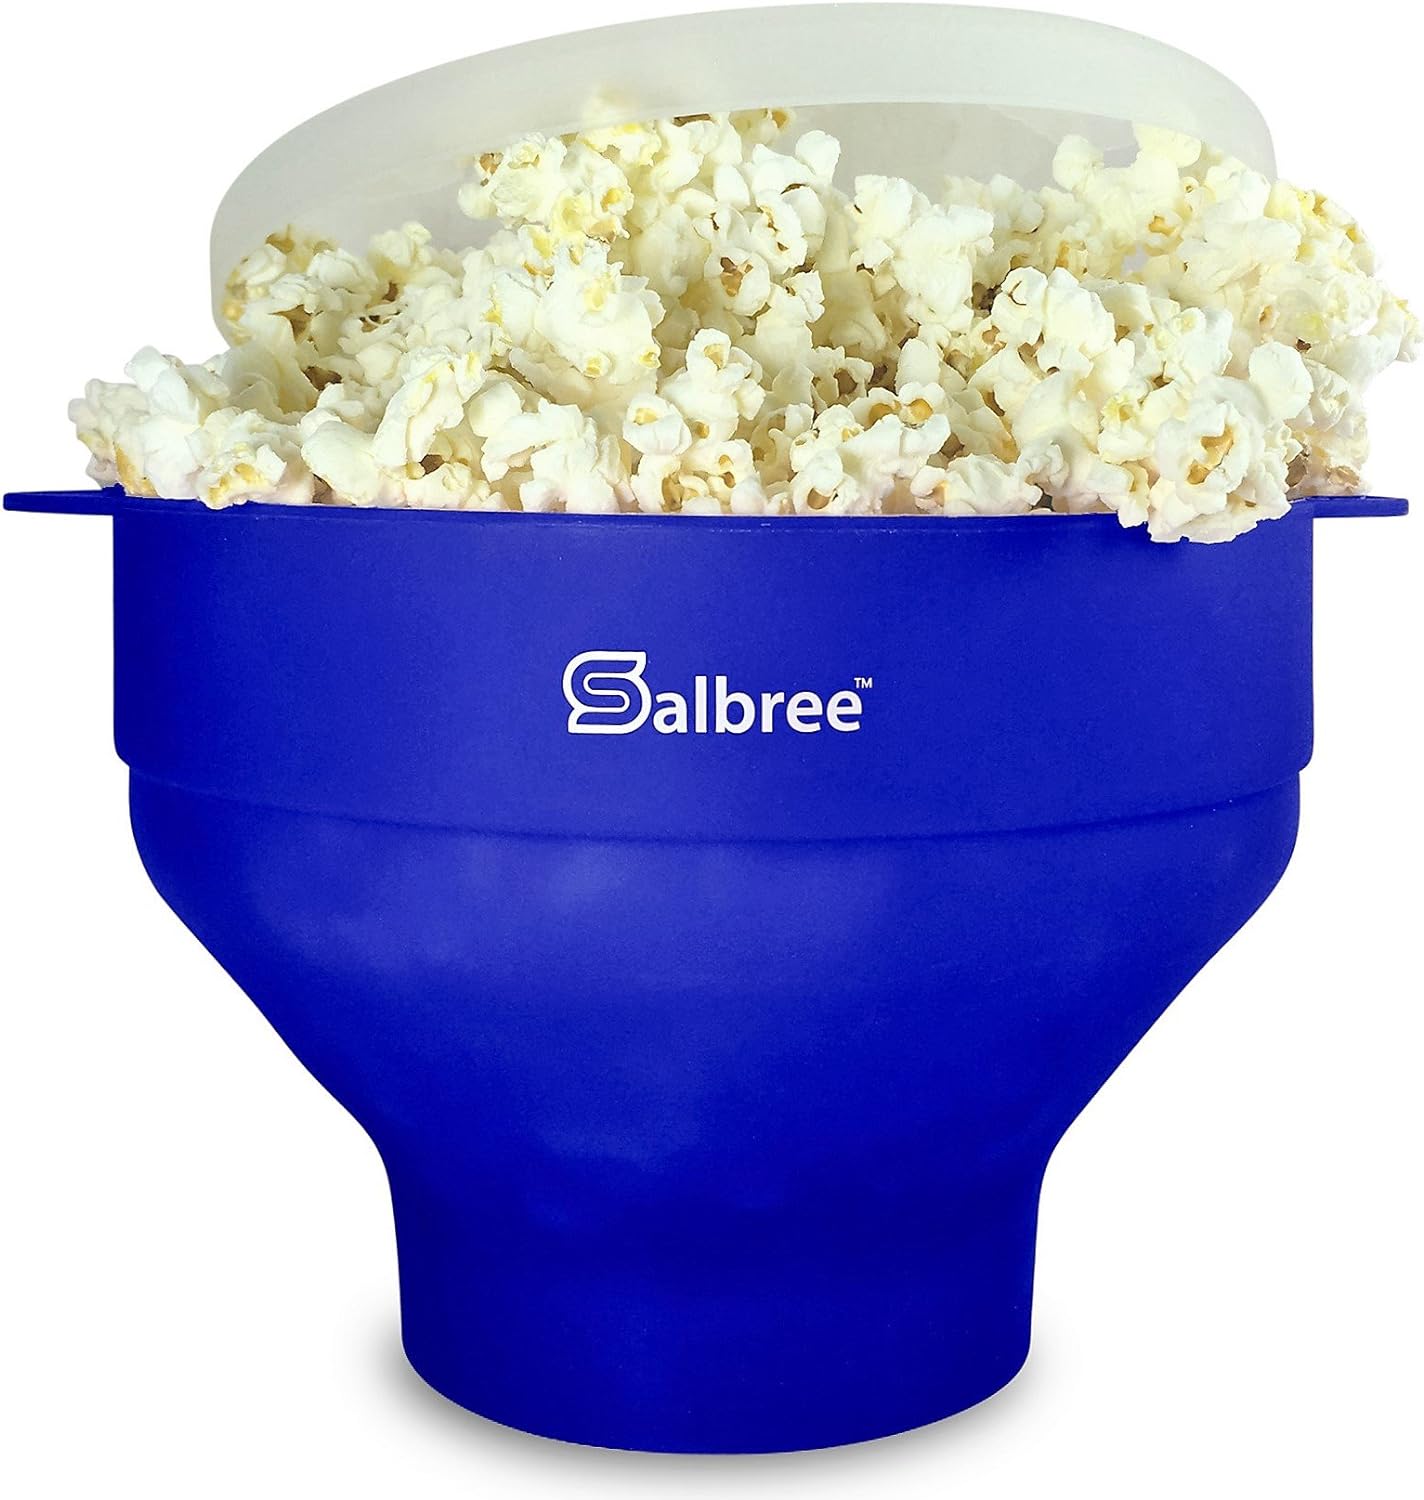 salbree the original microwave popcorn popper,